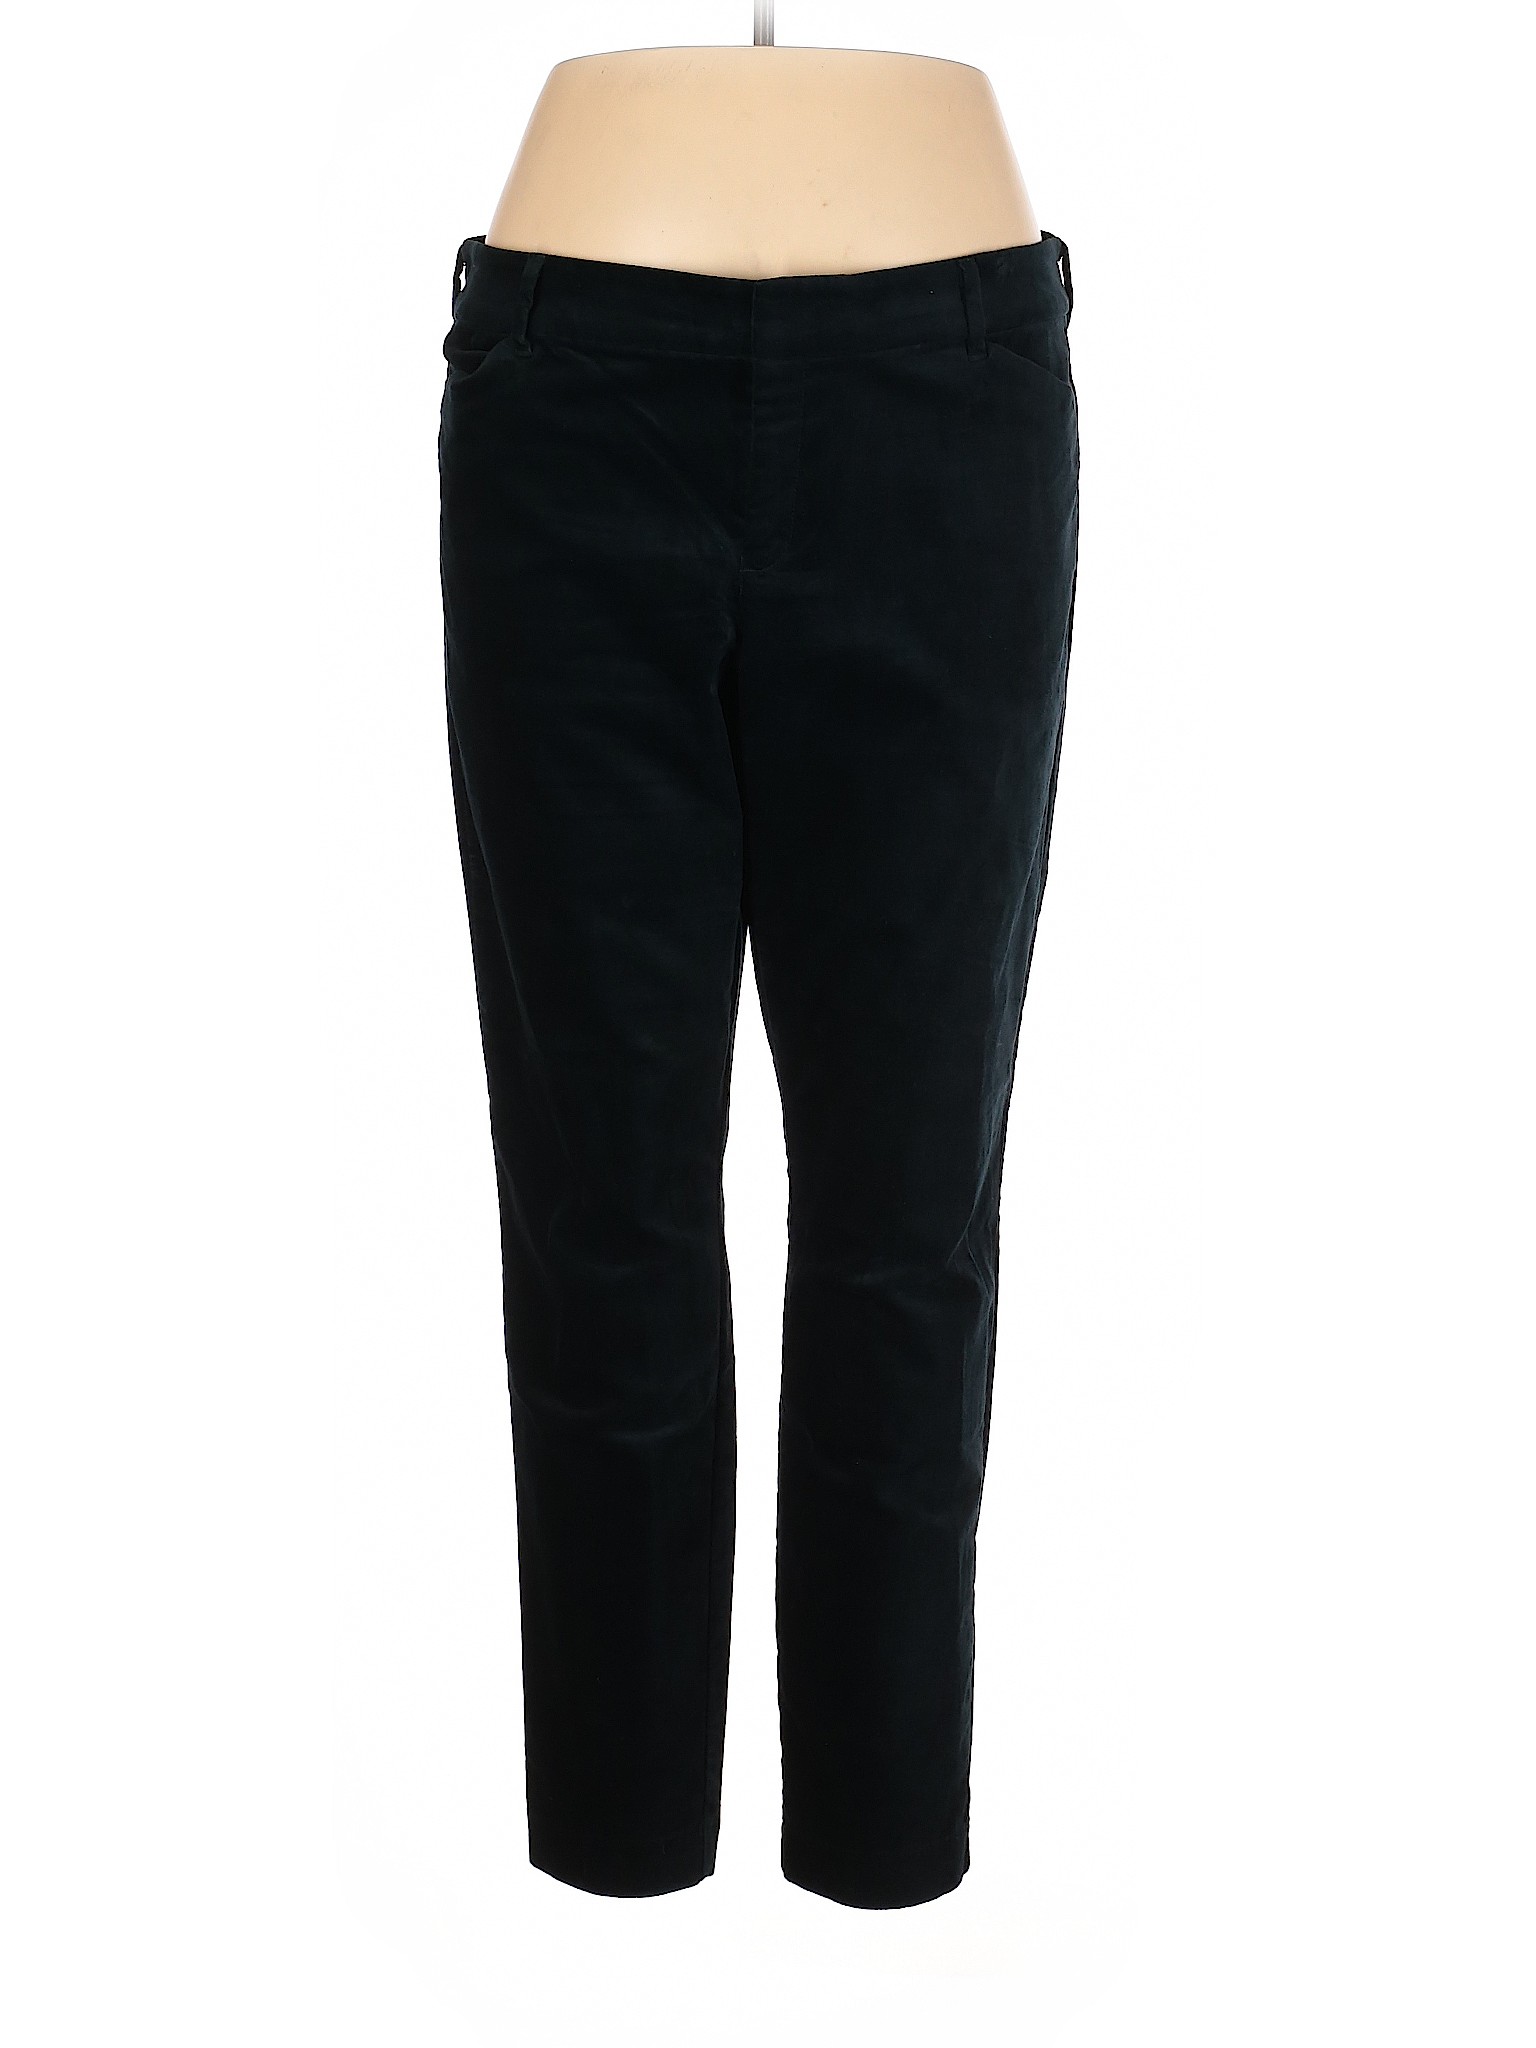 Old Navy Women Black Casual Pants 16 | eBay